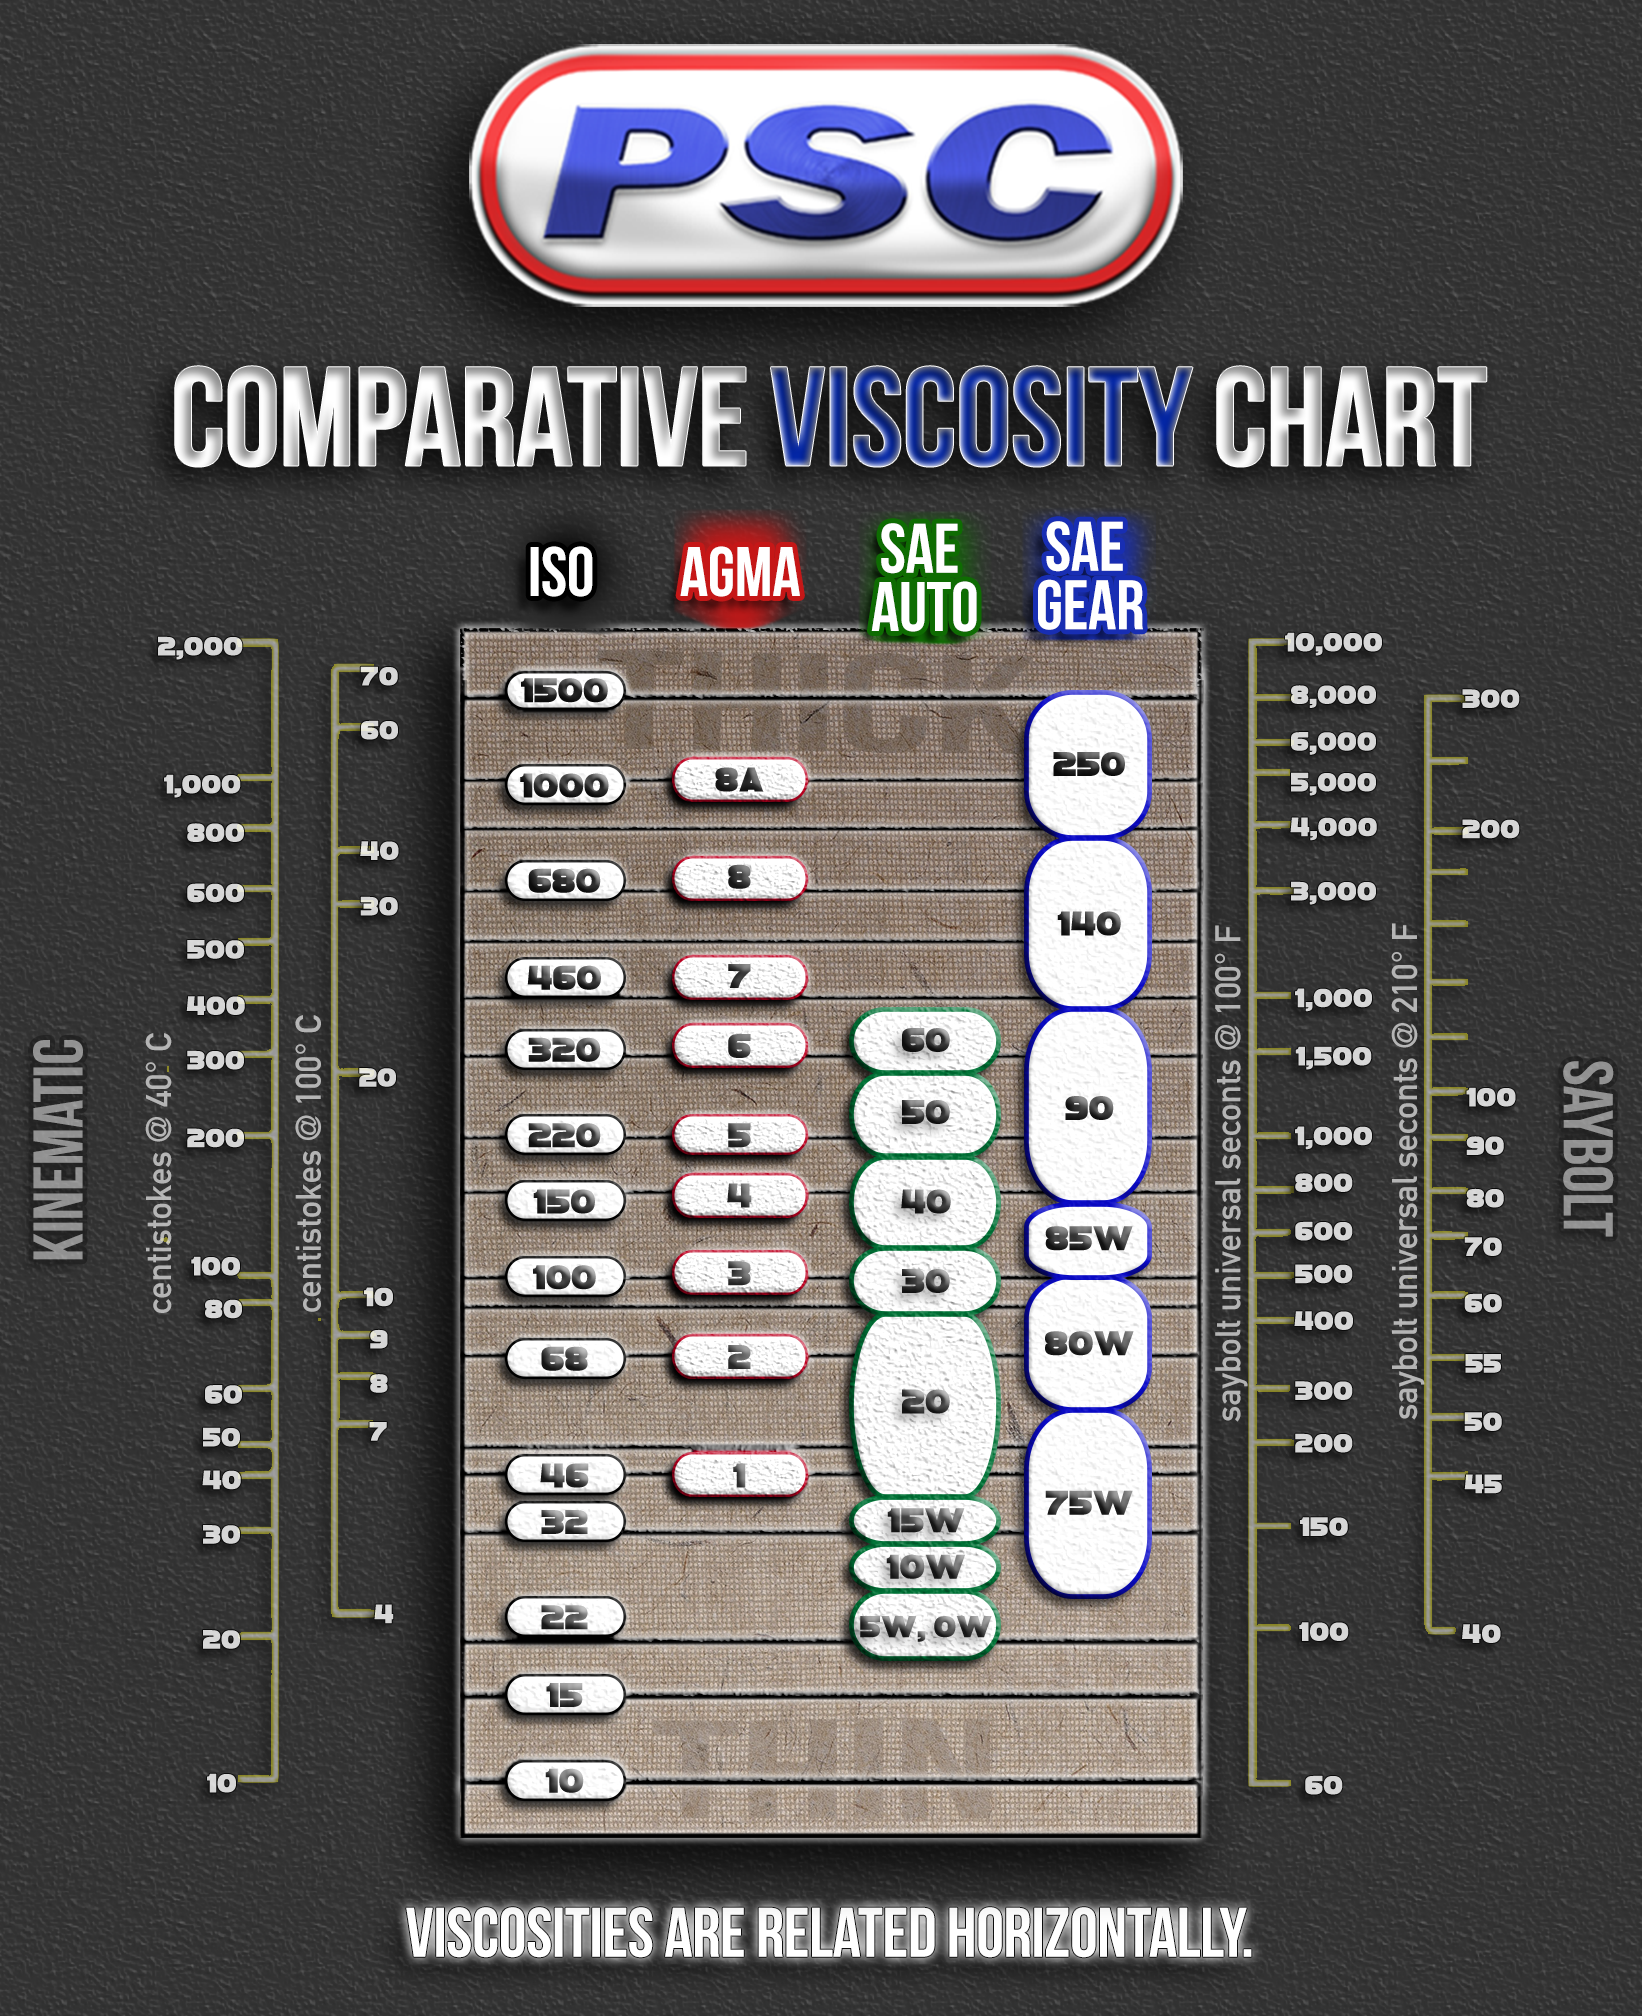 Oil Viscosity Comparison Chart ISO VG, AGMA, SAE Gear, SAE Auto